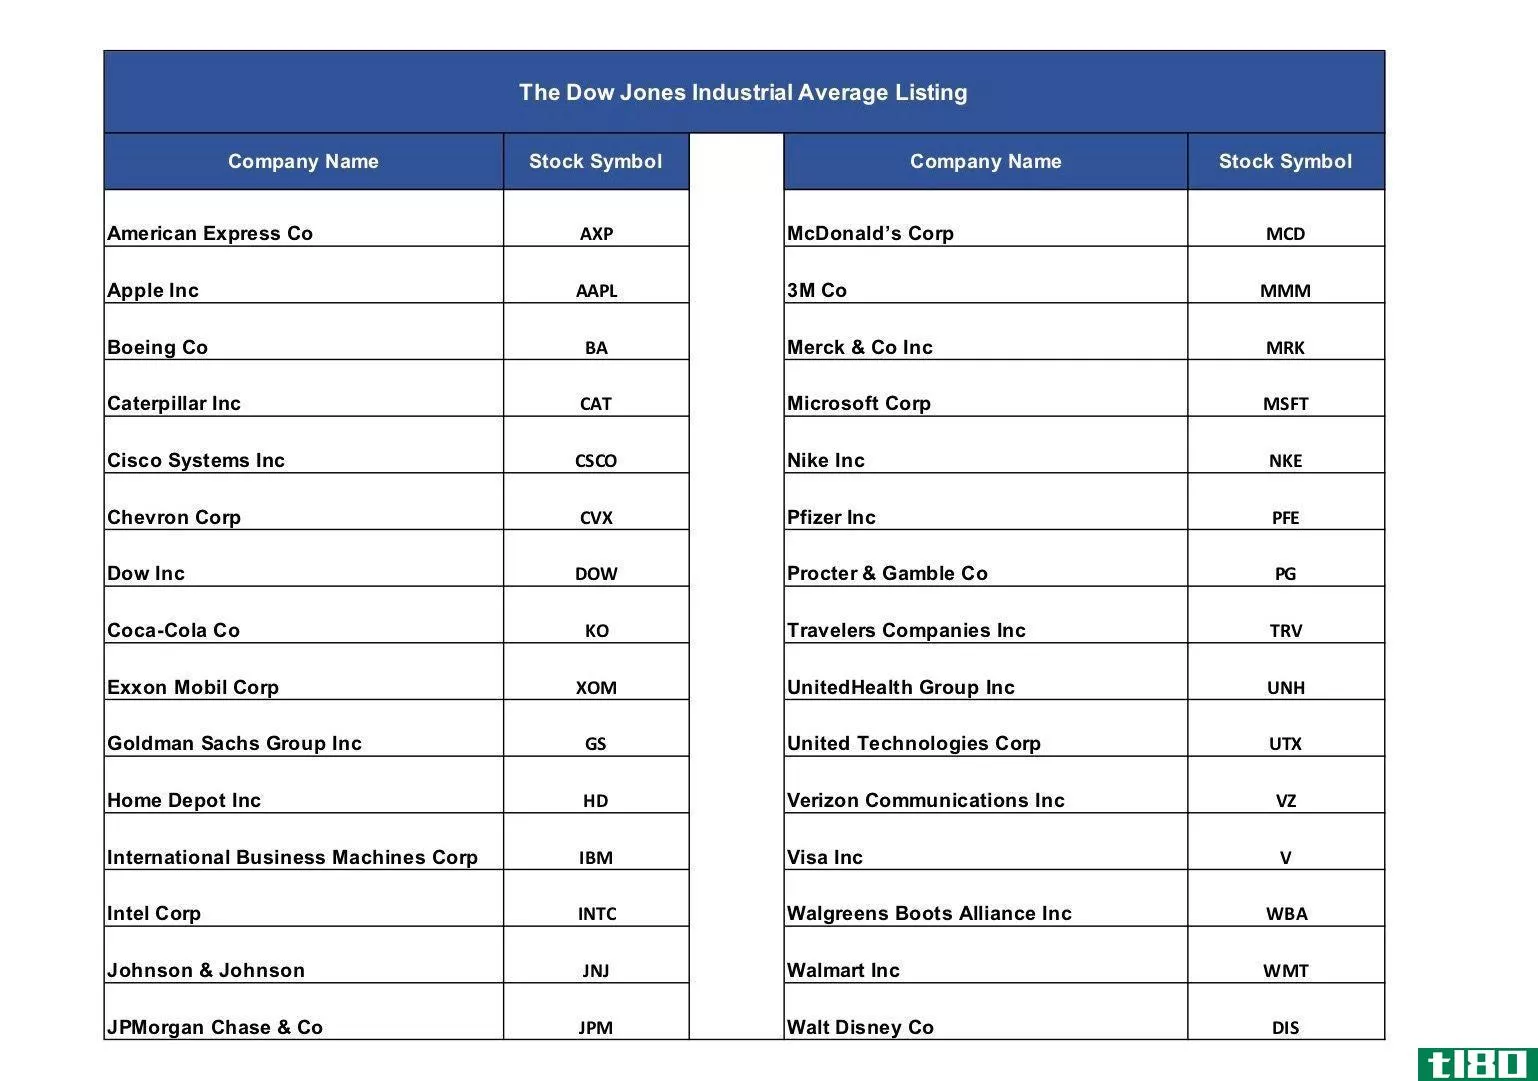 The Dow Jones Industrial Average Company Listing